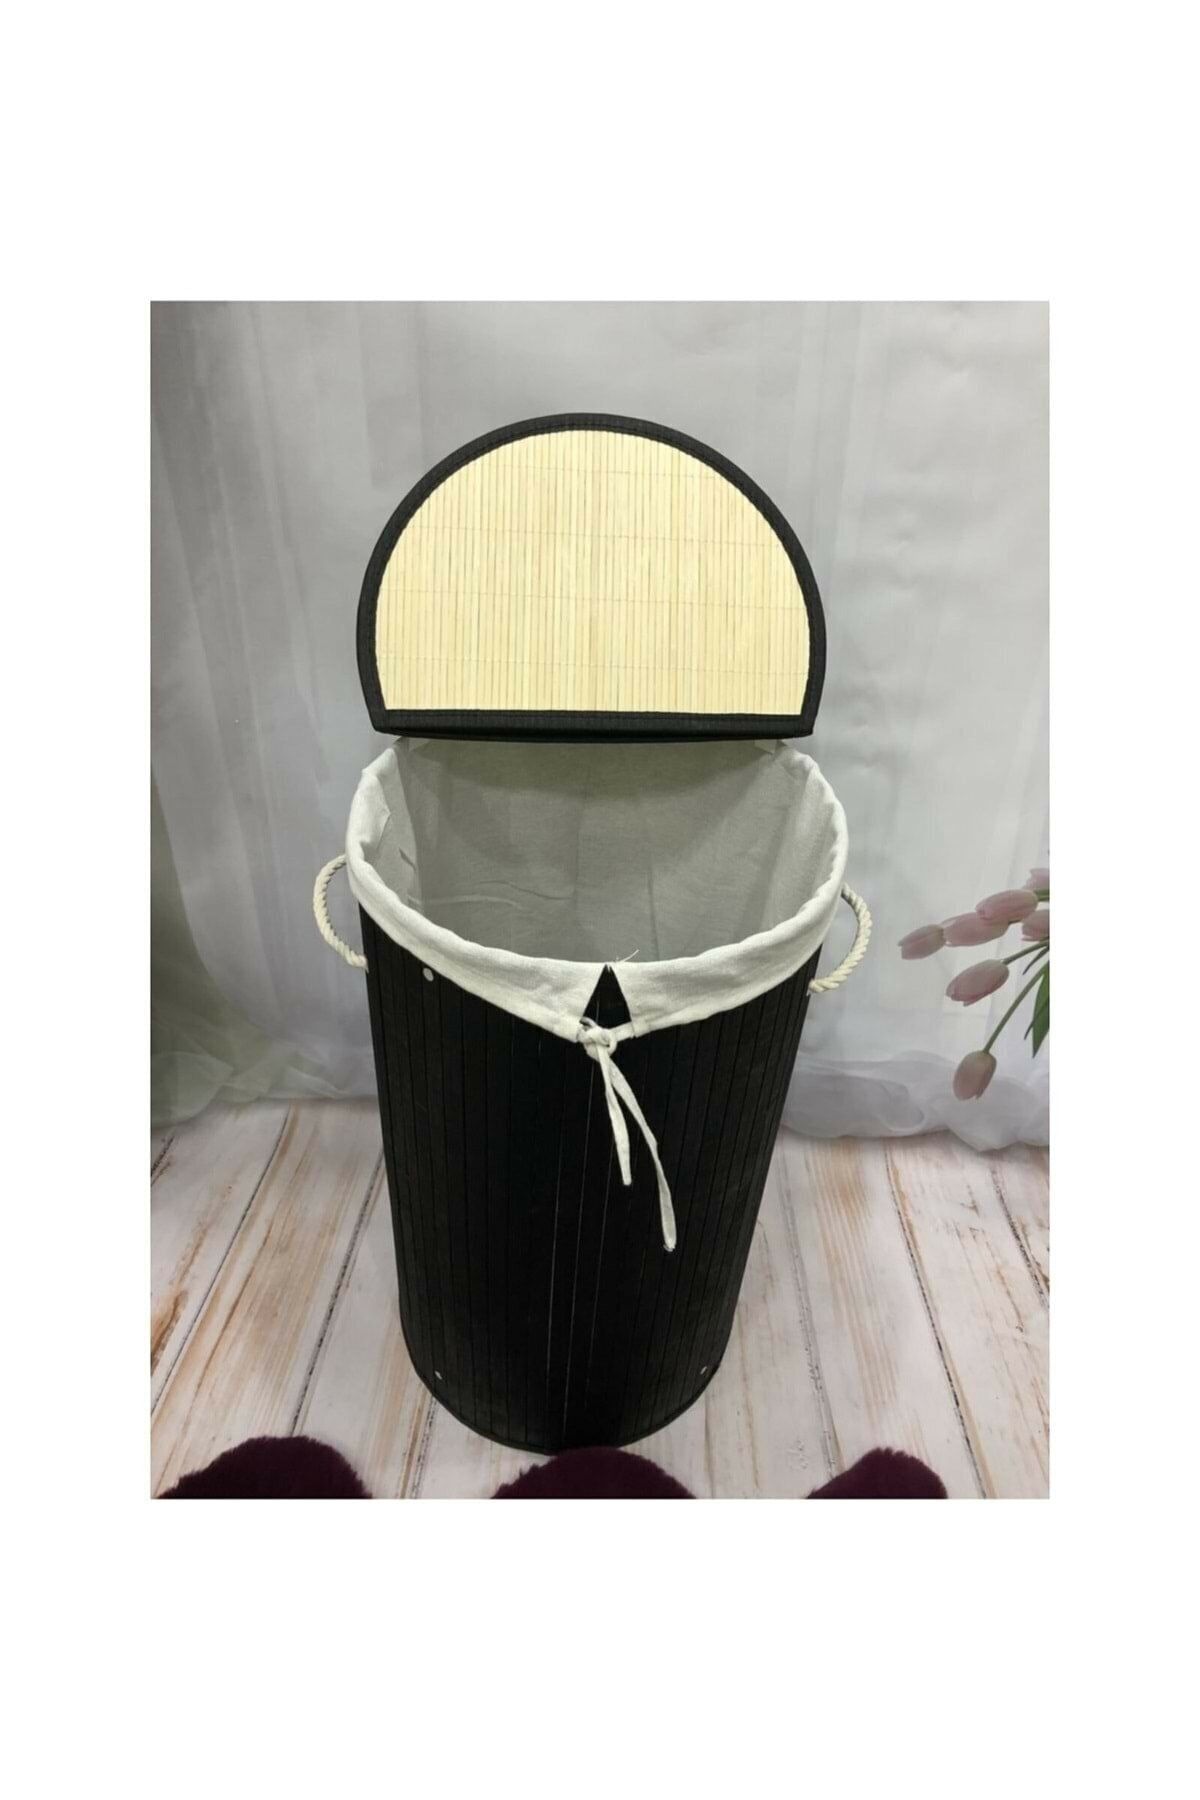 E-LİFE HOME Katlanır Oval Bambu Çamaşır Kirli Sepeti